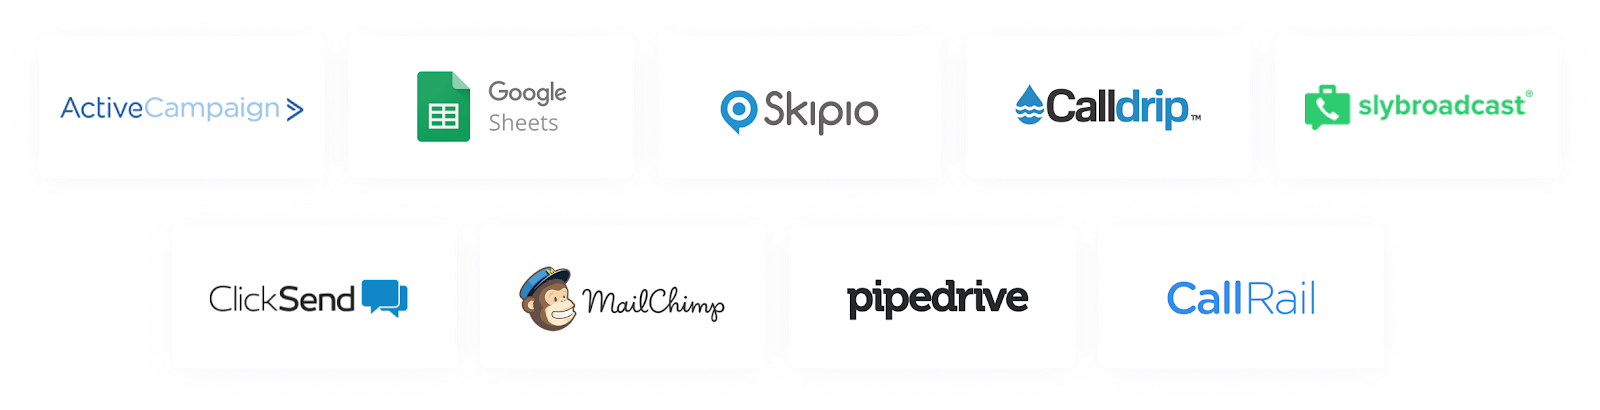 Active Campaign, Google Sheets, Skipio, CallDrip, Slybroadast, ClickSend, Mailchimp, Pipedrive, CallRail